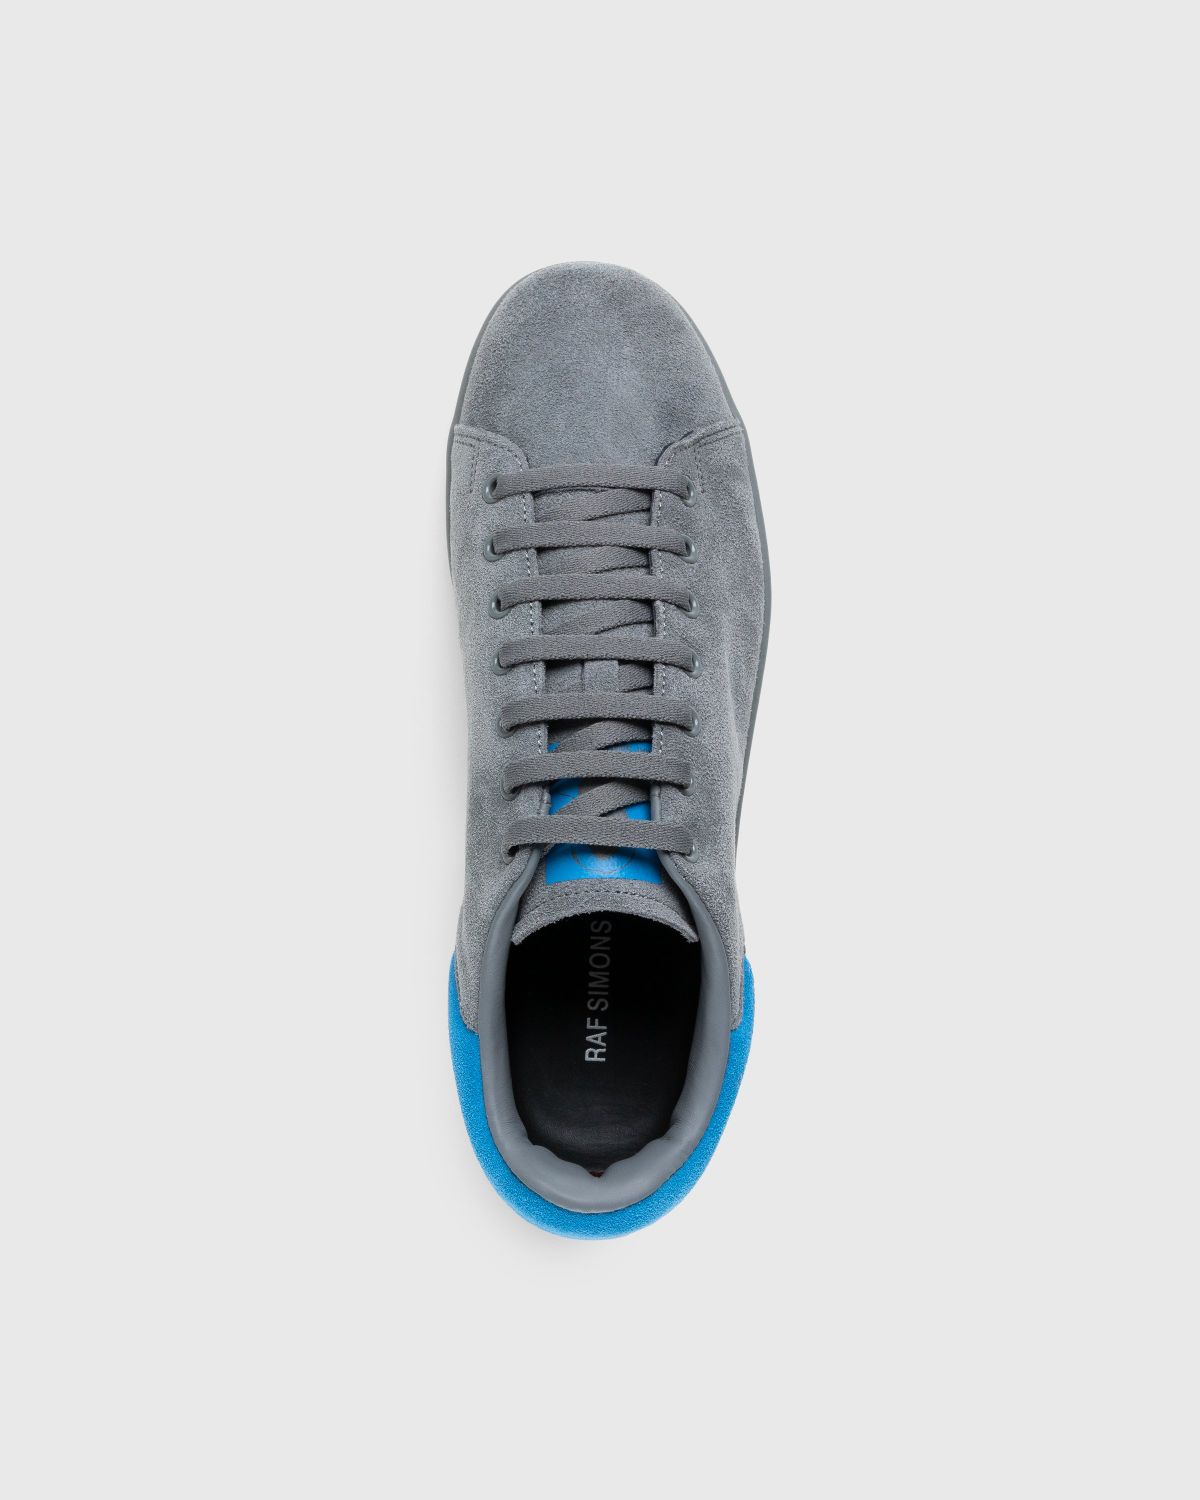 Raf Simons – Orion Grey - Sneakers - Grey - Image 5